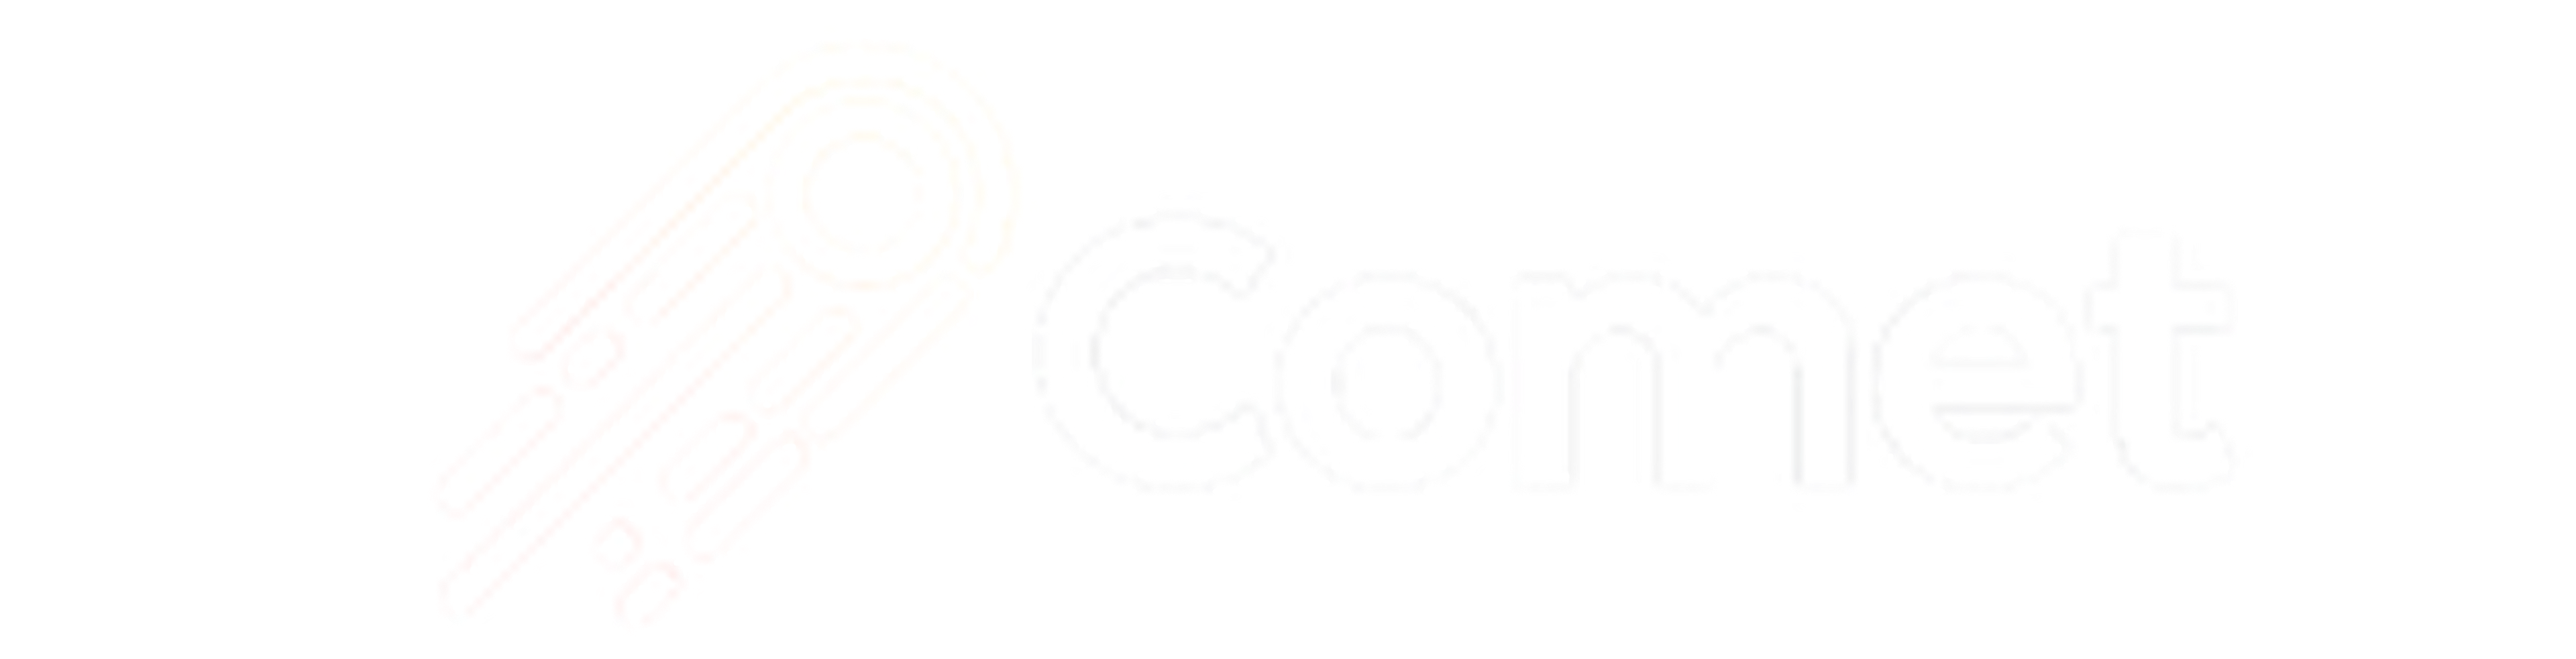 Comet logo white